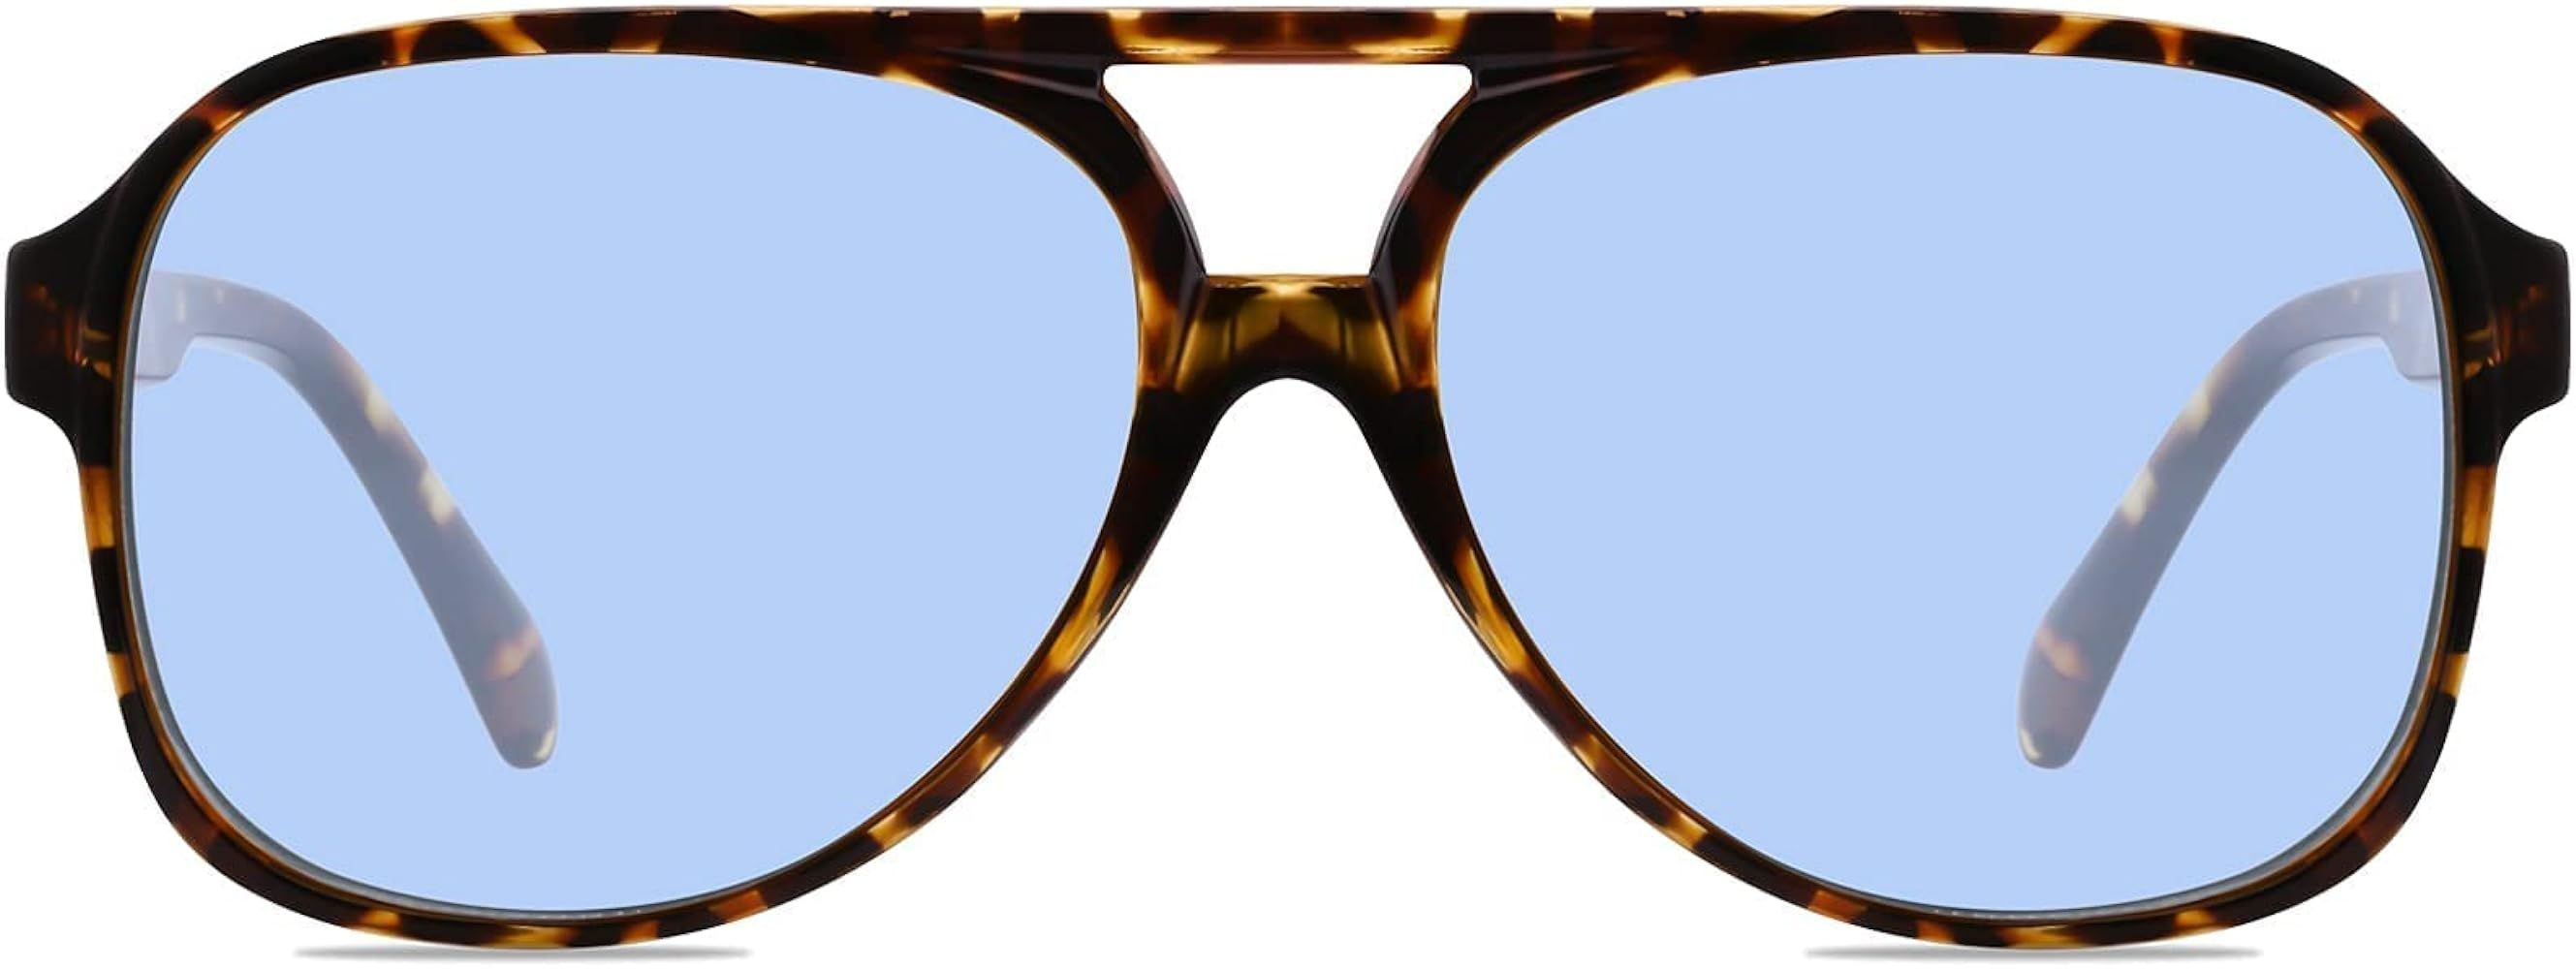 YDAOWKN Classic Vintage Aviator Sunglasses for Women Men Large Frame Retro 70s Sunglasses UV400 | Amazon (US)